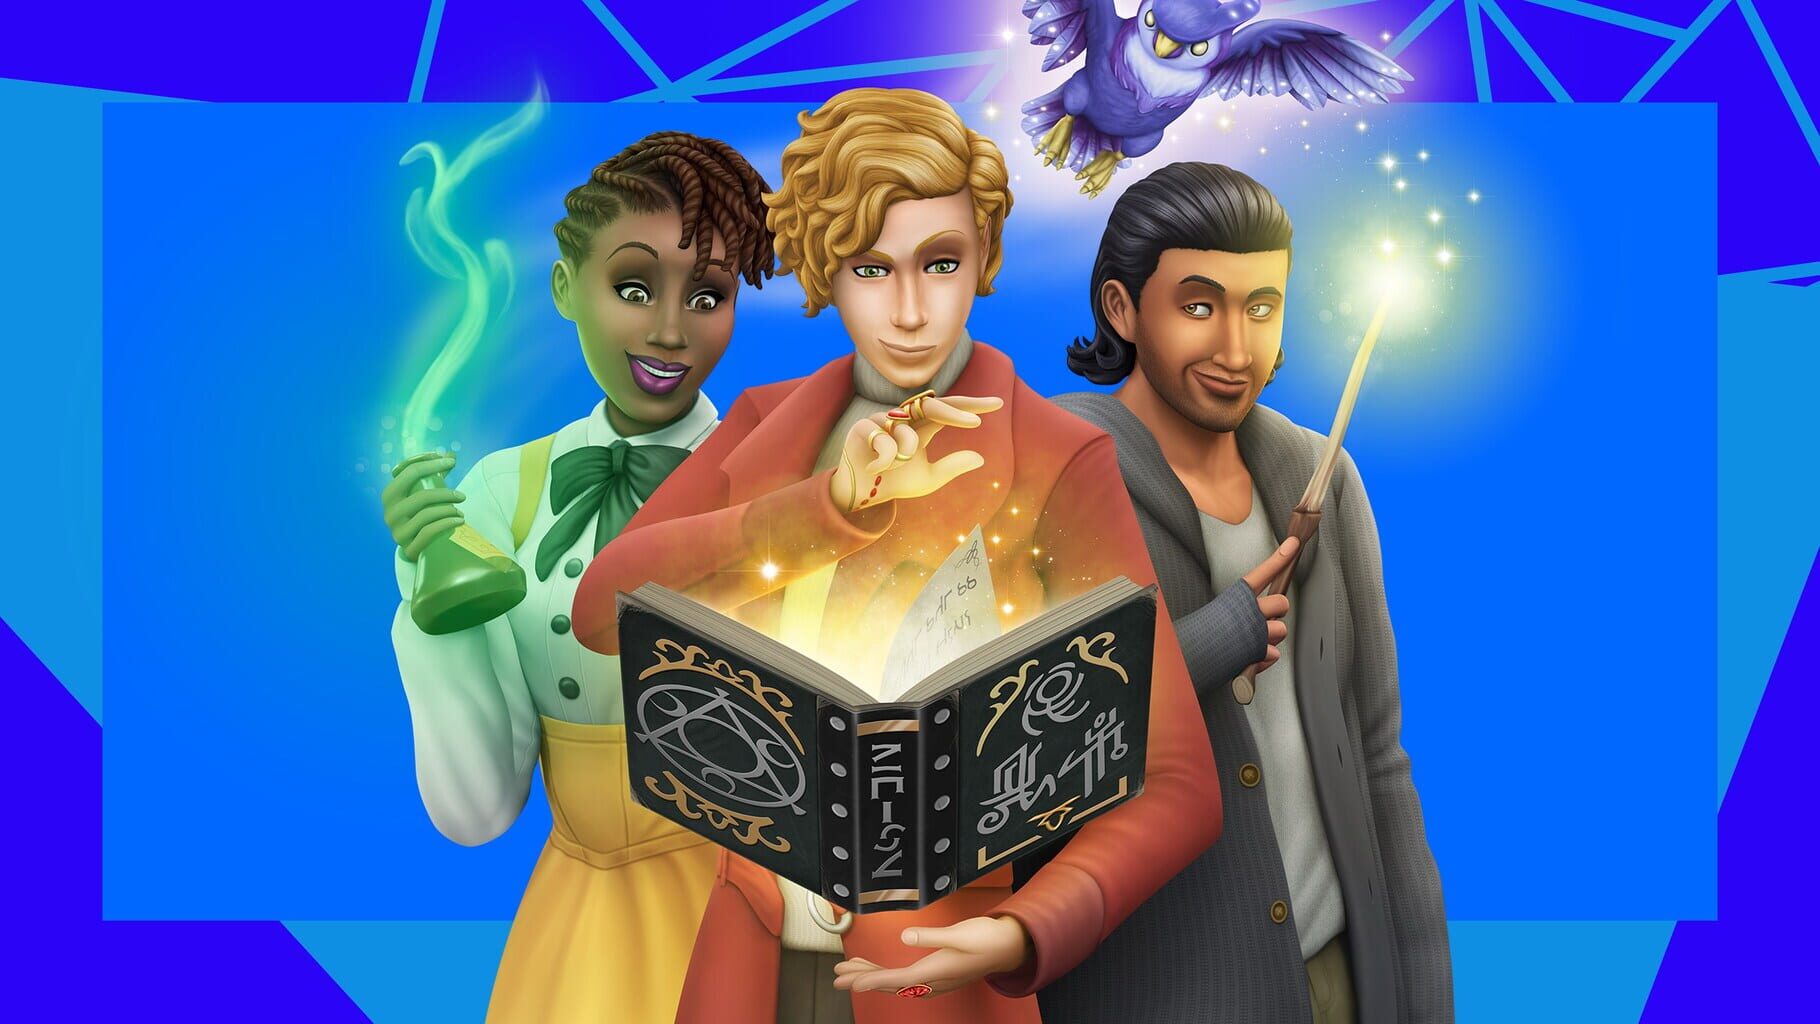 Arte - The Sims 4: Realm of Magic